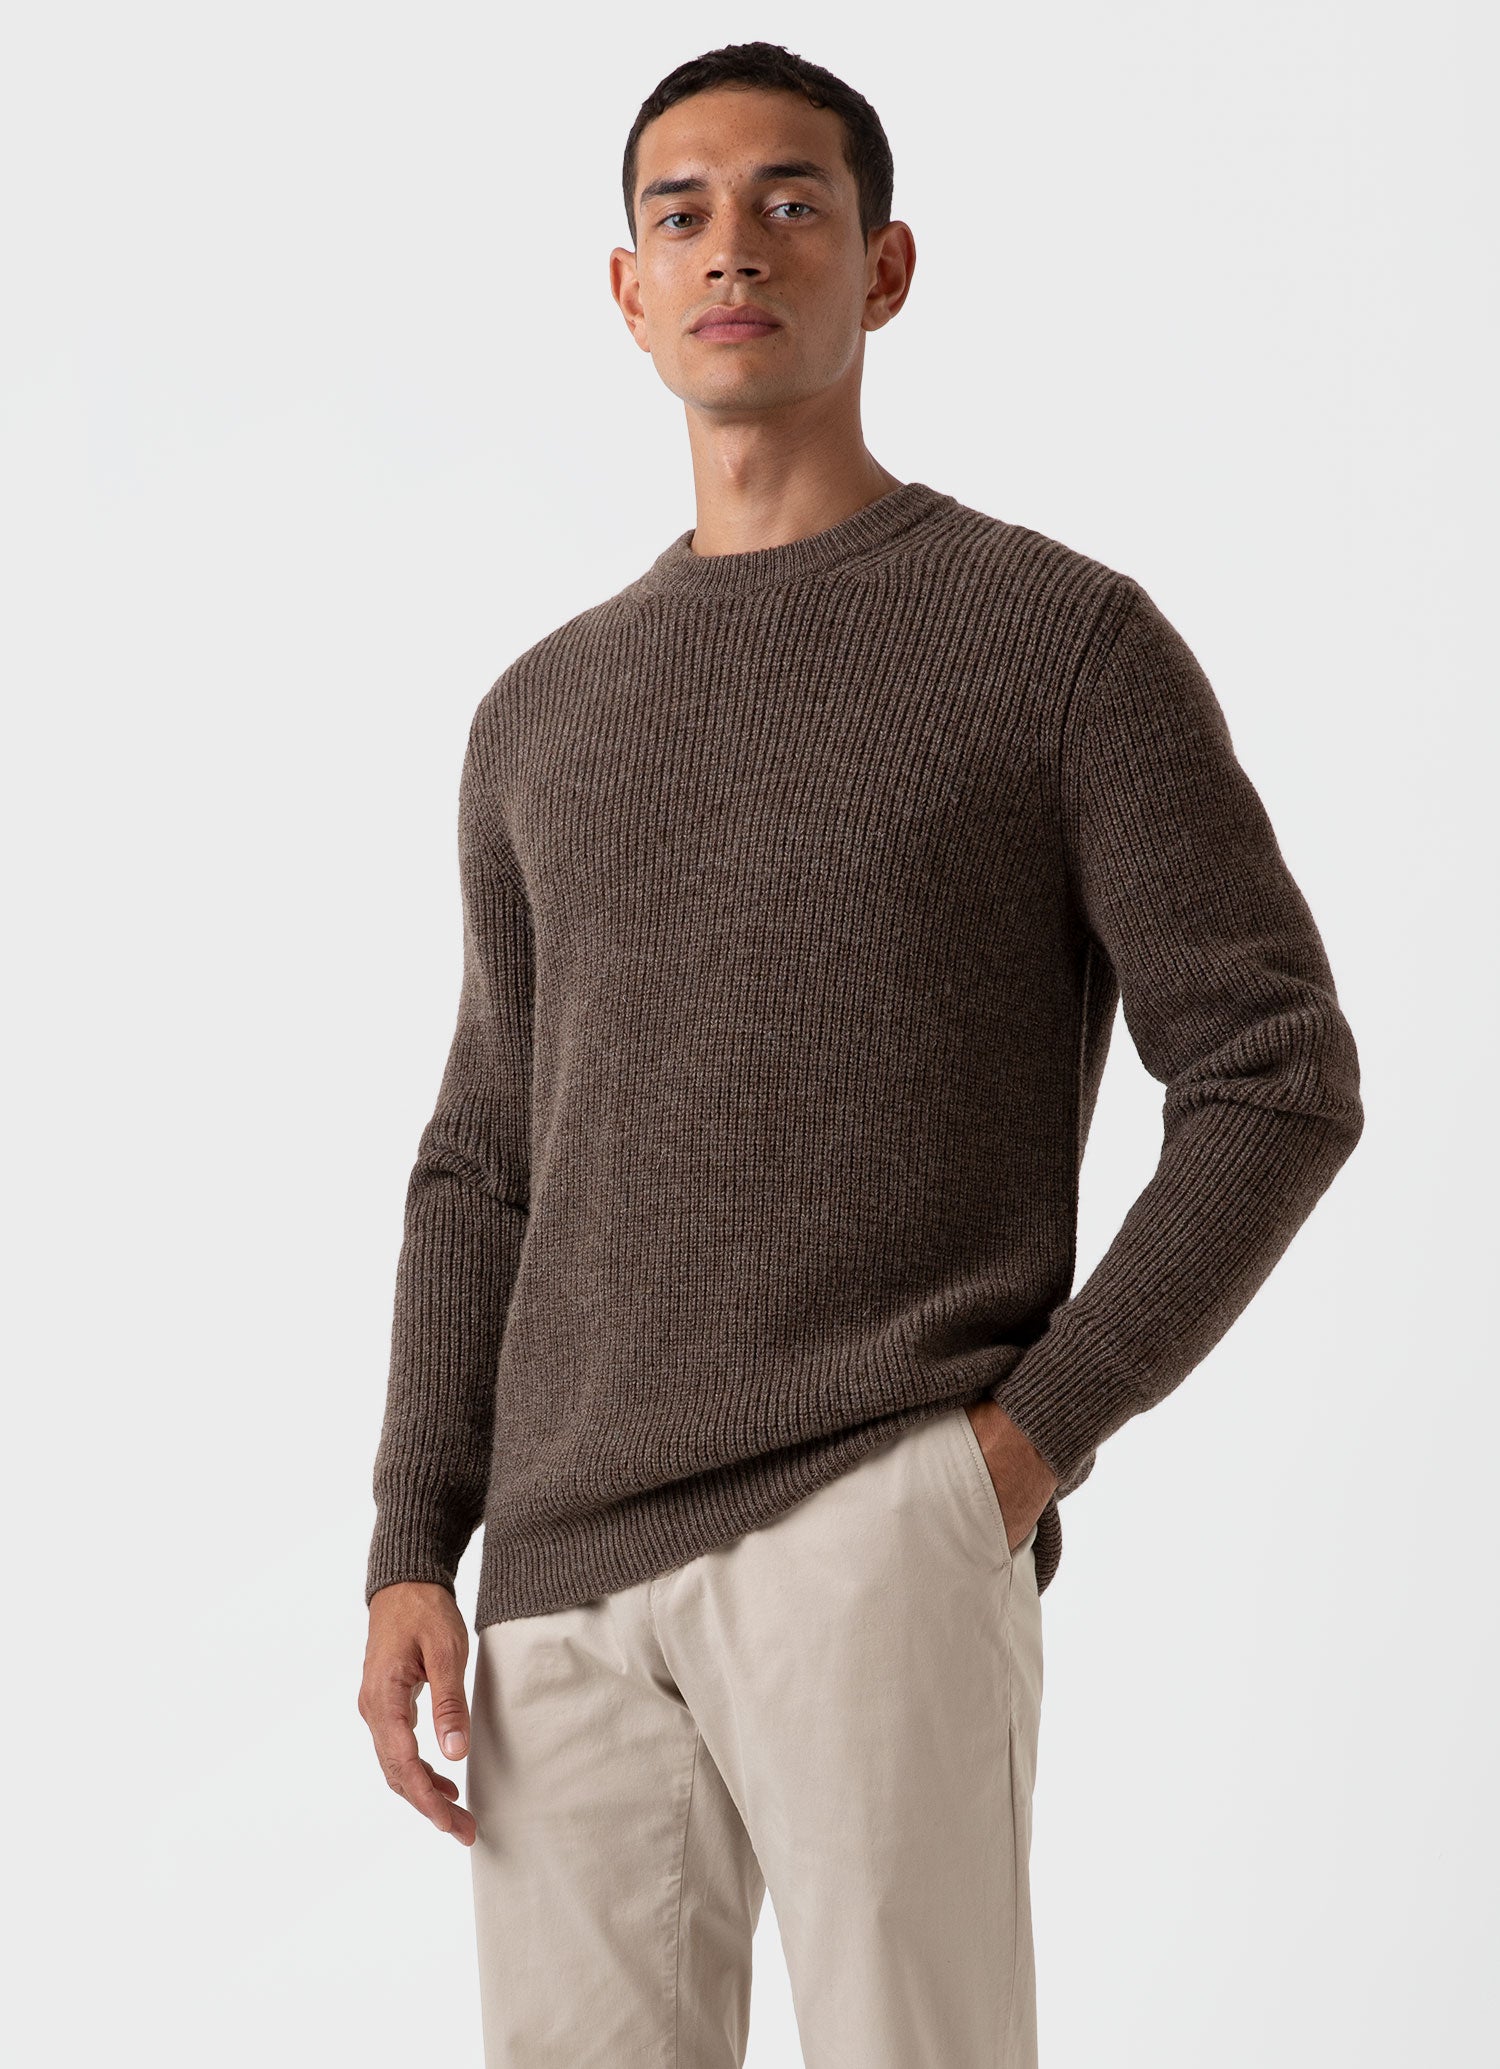 Men's Luxury British Wool Jumper in Natural Brown | Sunspel